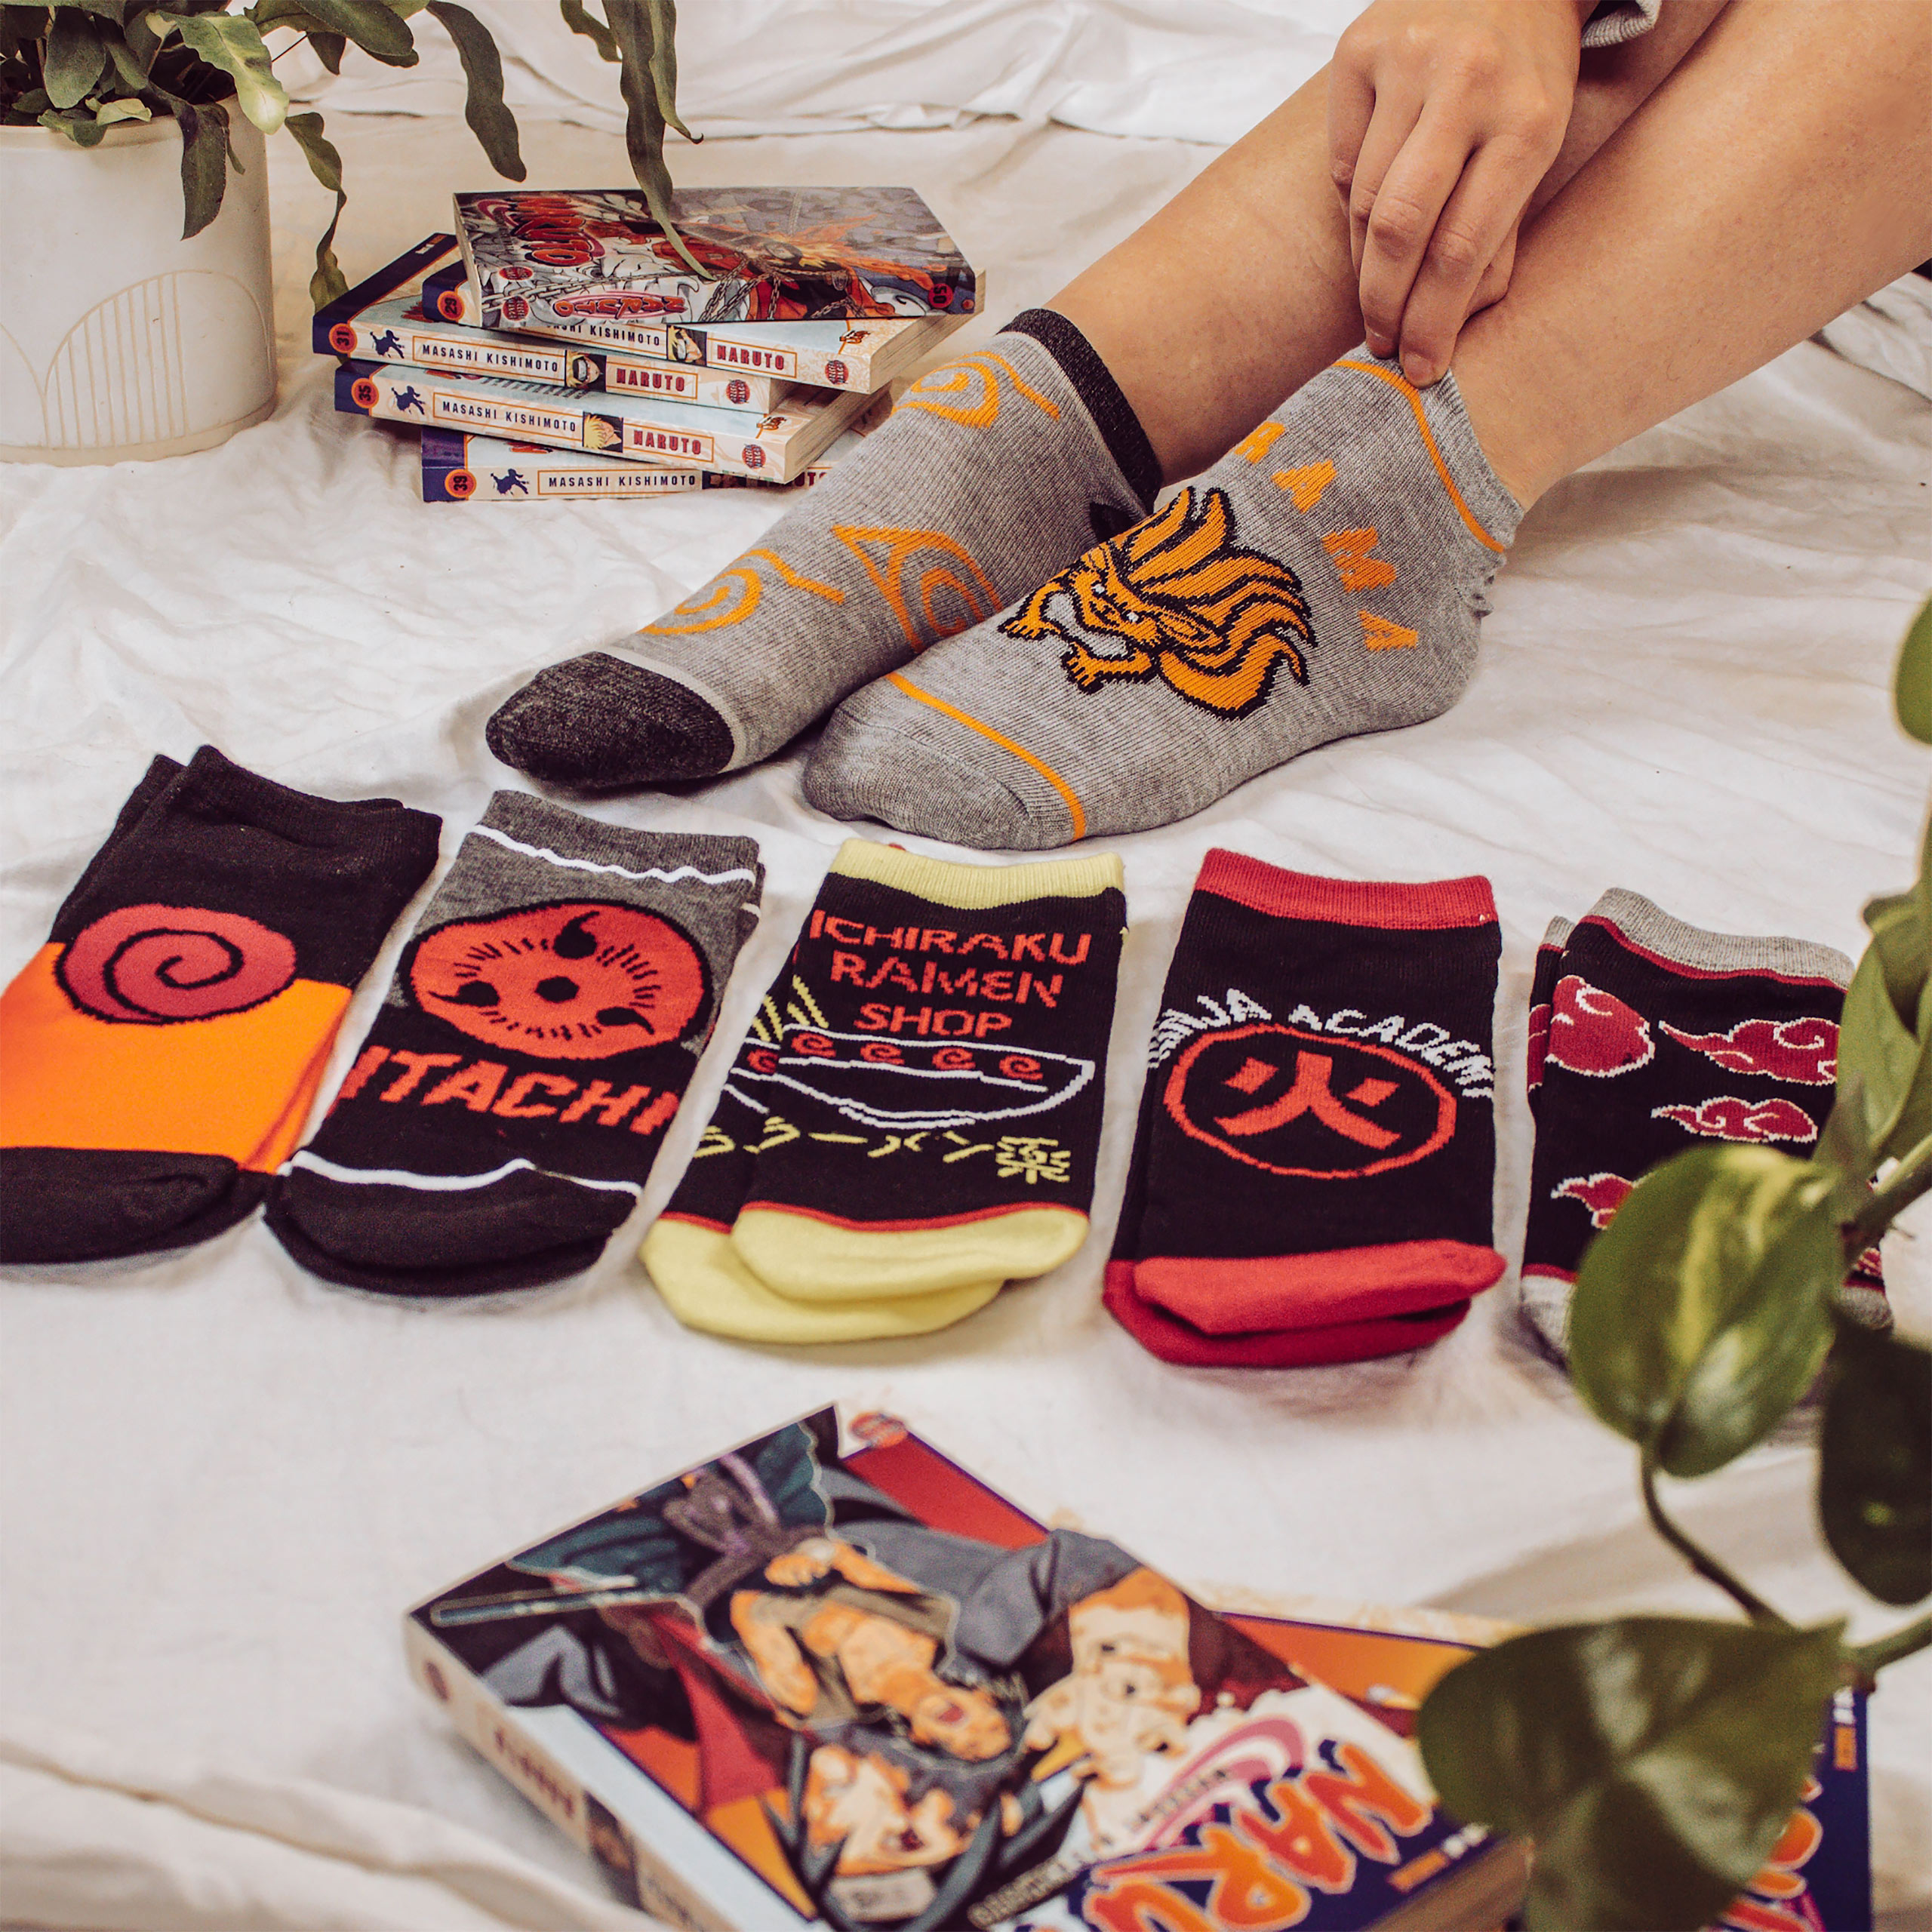 Naruto Shippuden - Icons Socks 7 Set